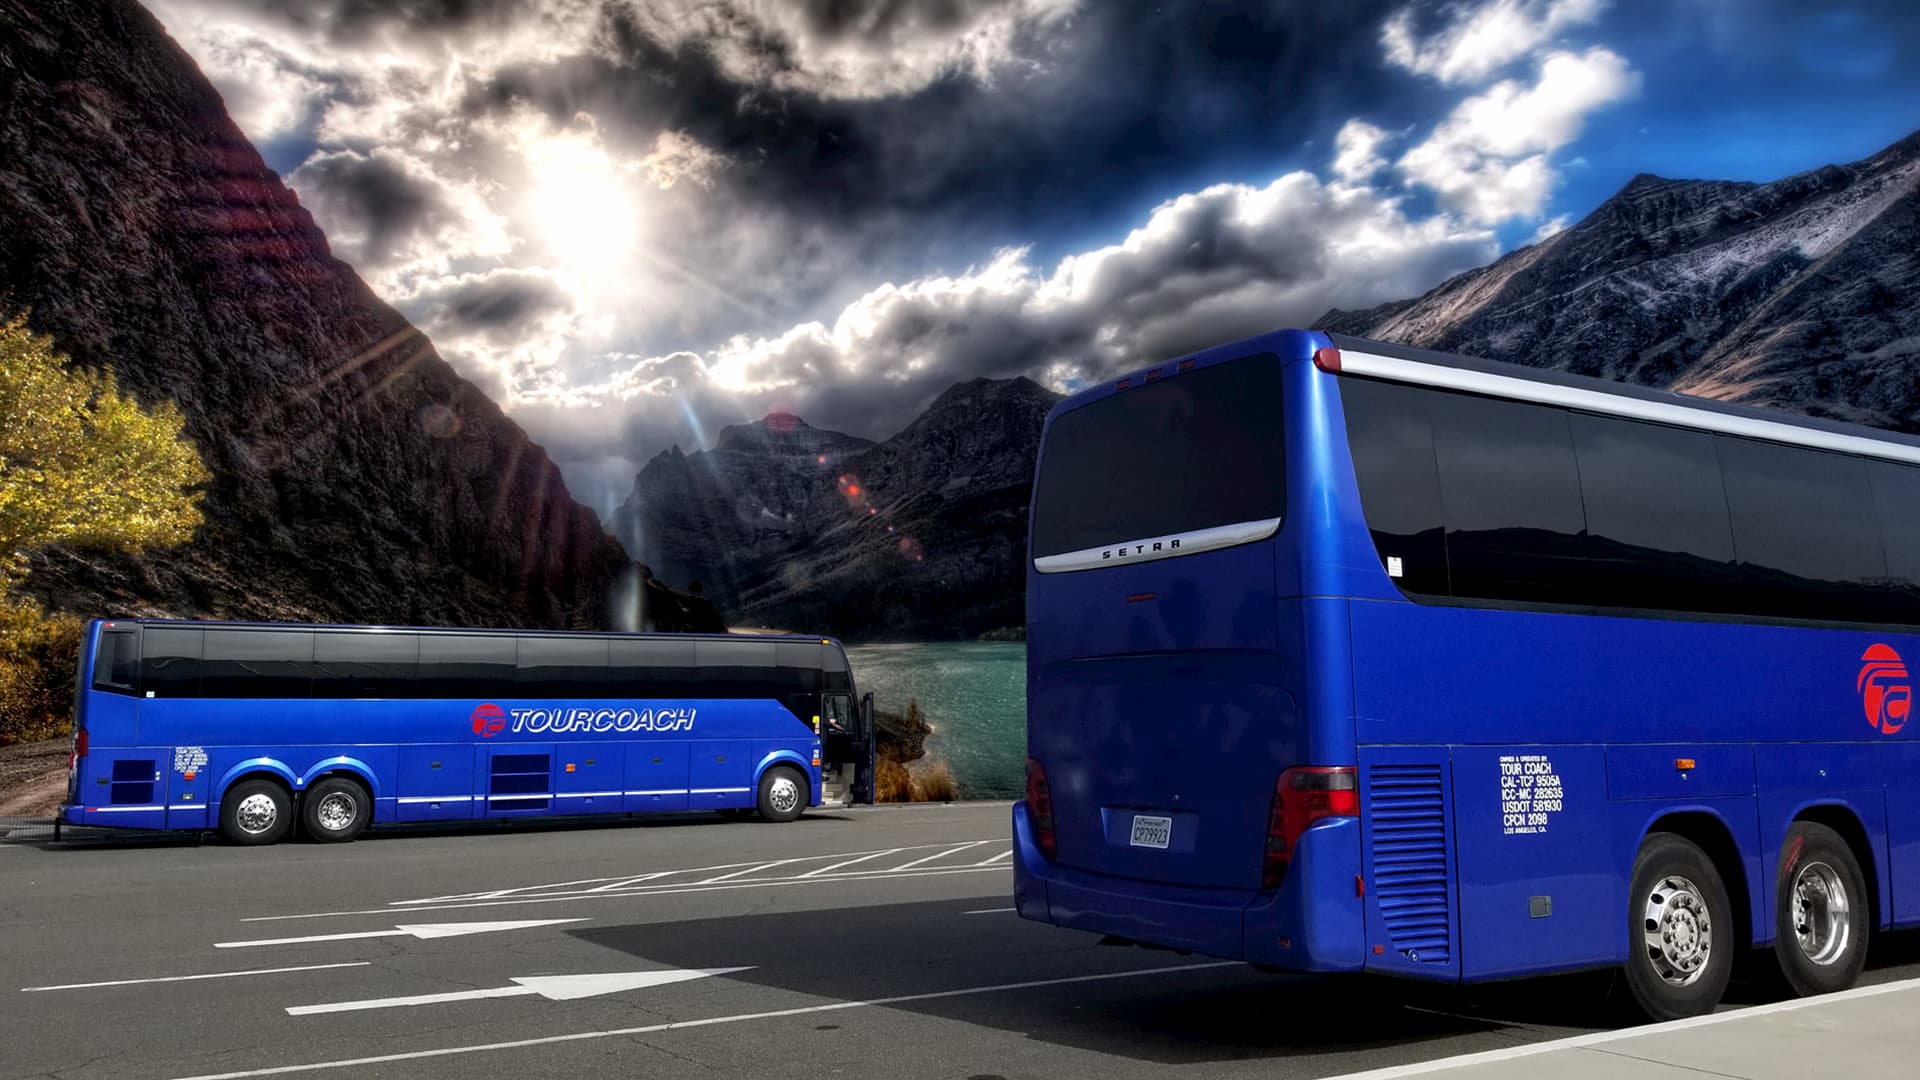 Tour Coach Bus by a Mountain